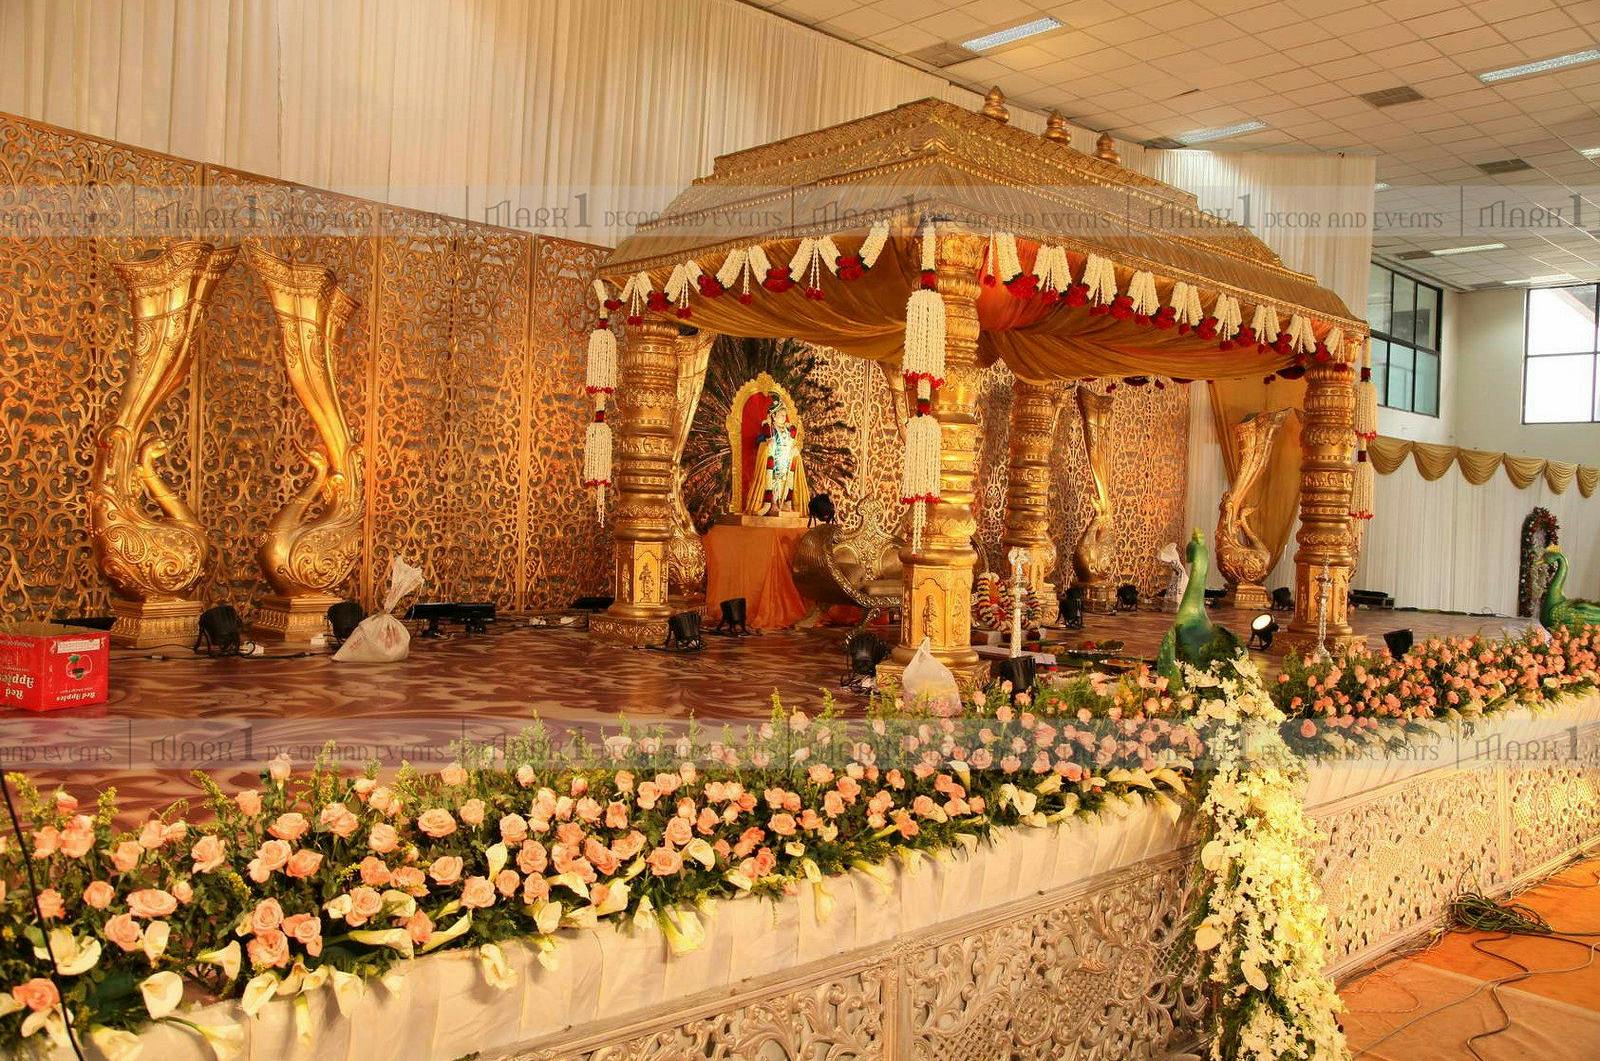  temple-like classic theme wedding stage decoration ideas